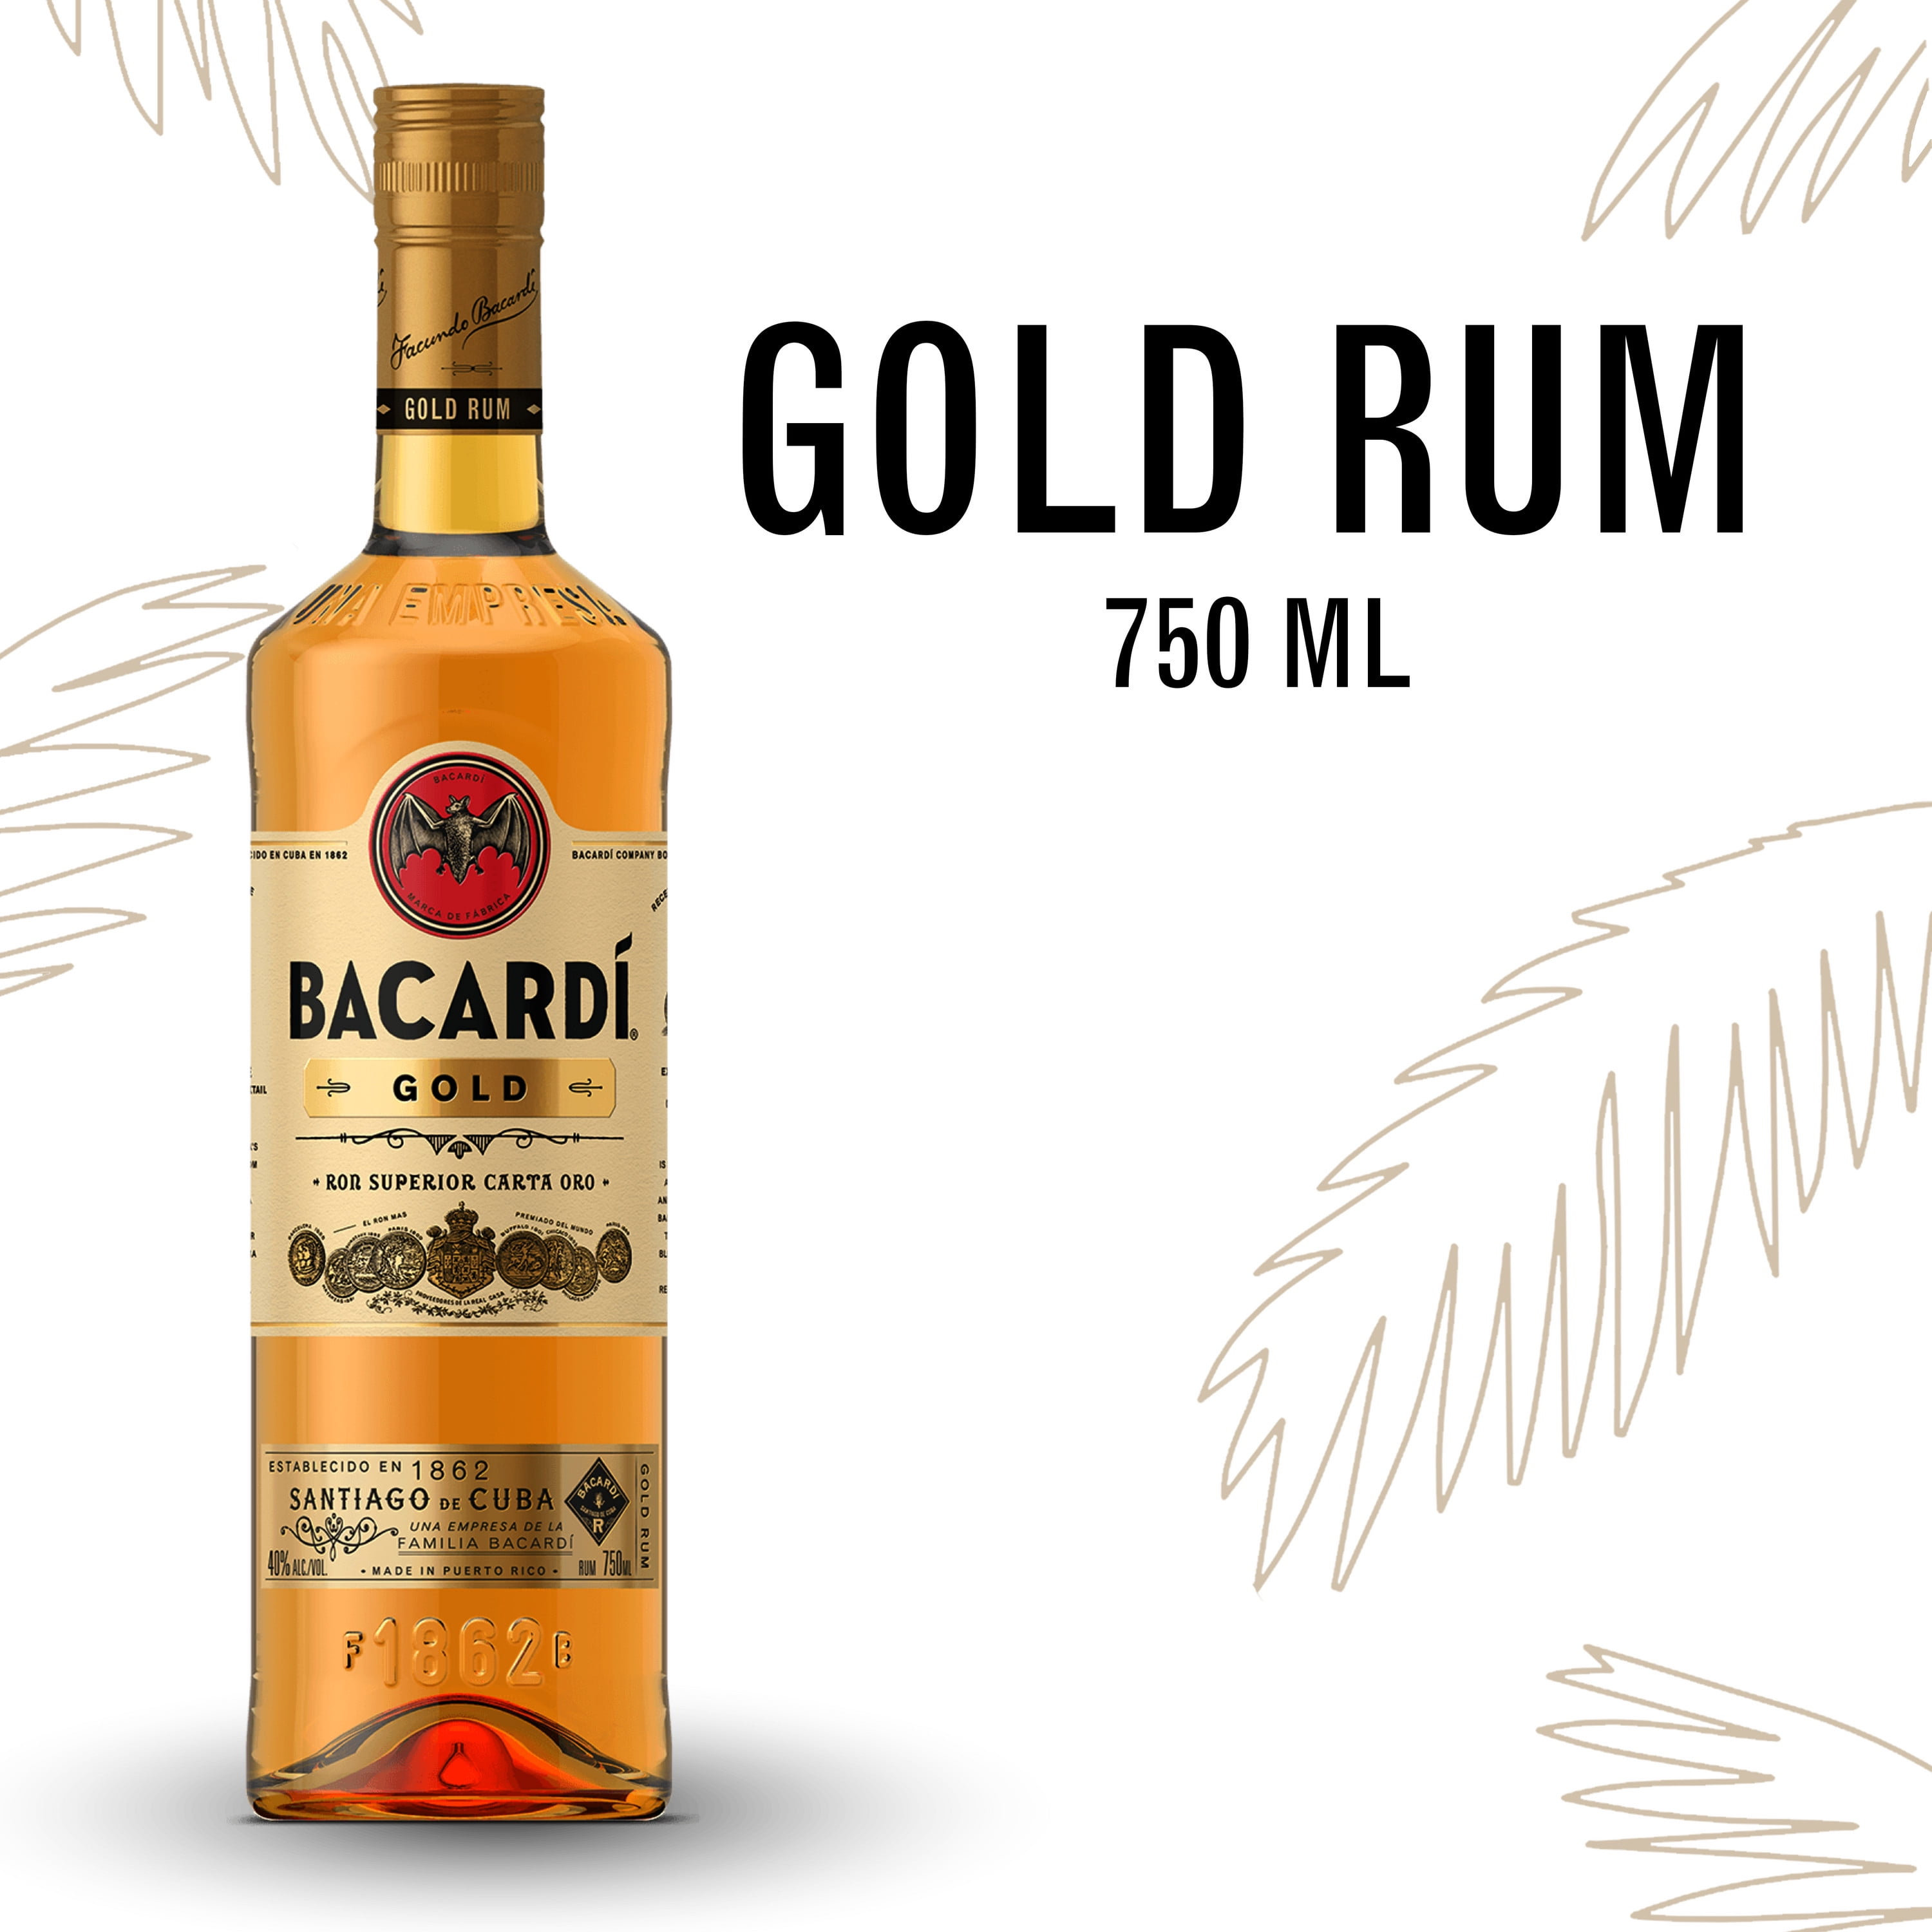 Rum-Bar Rum Gold 750ml